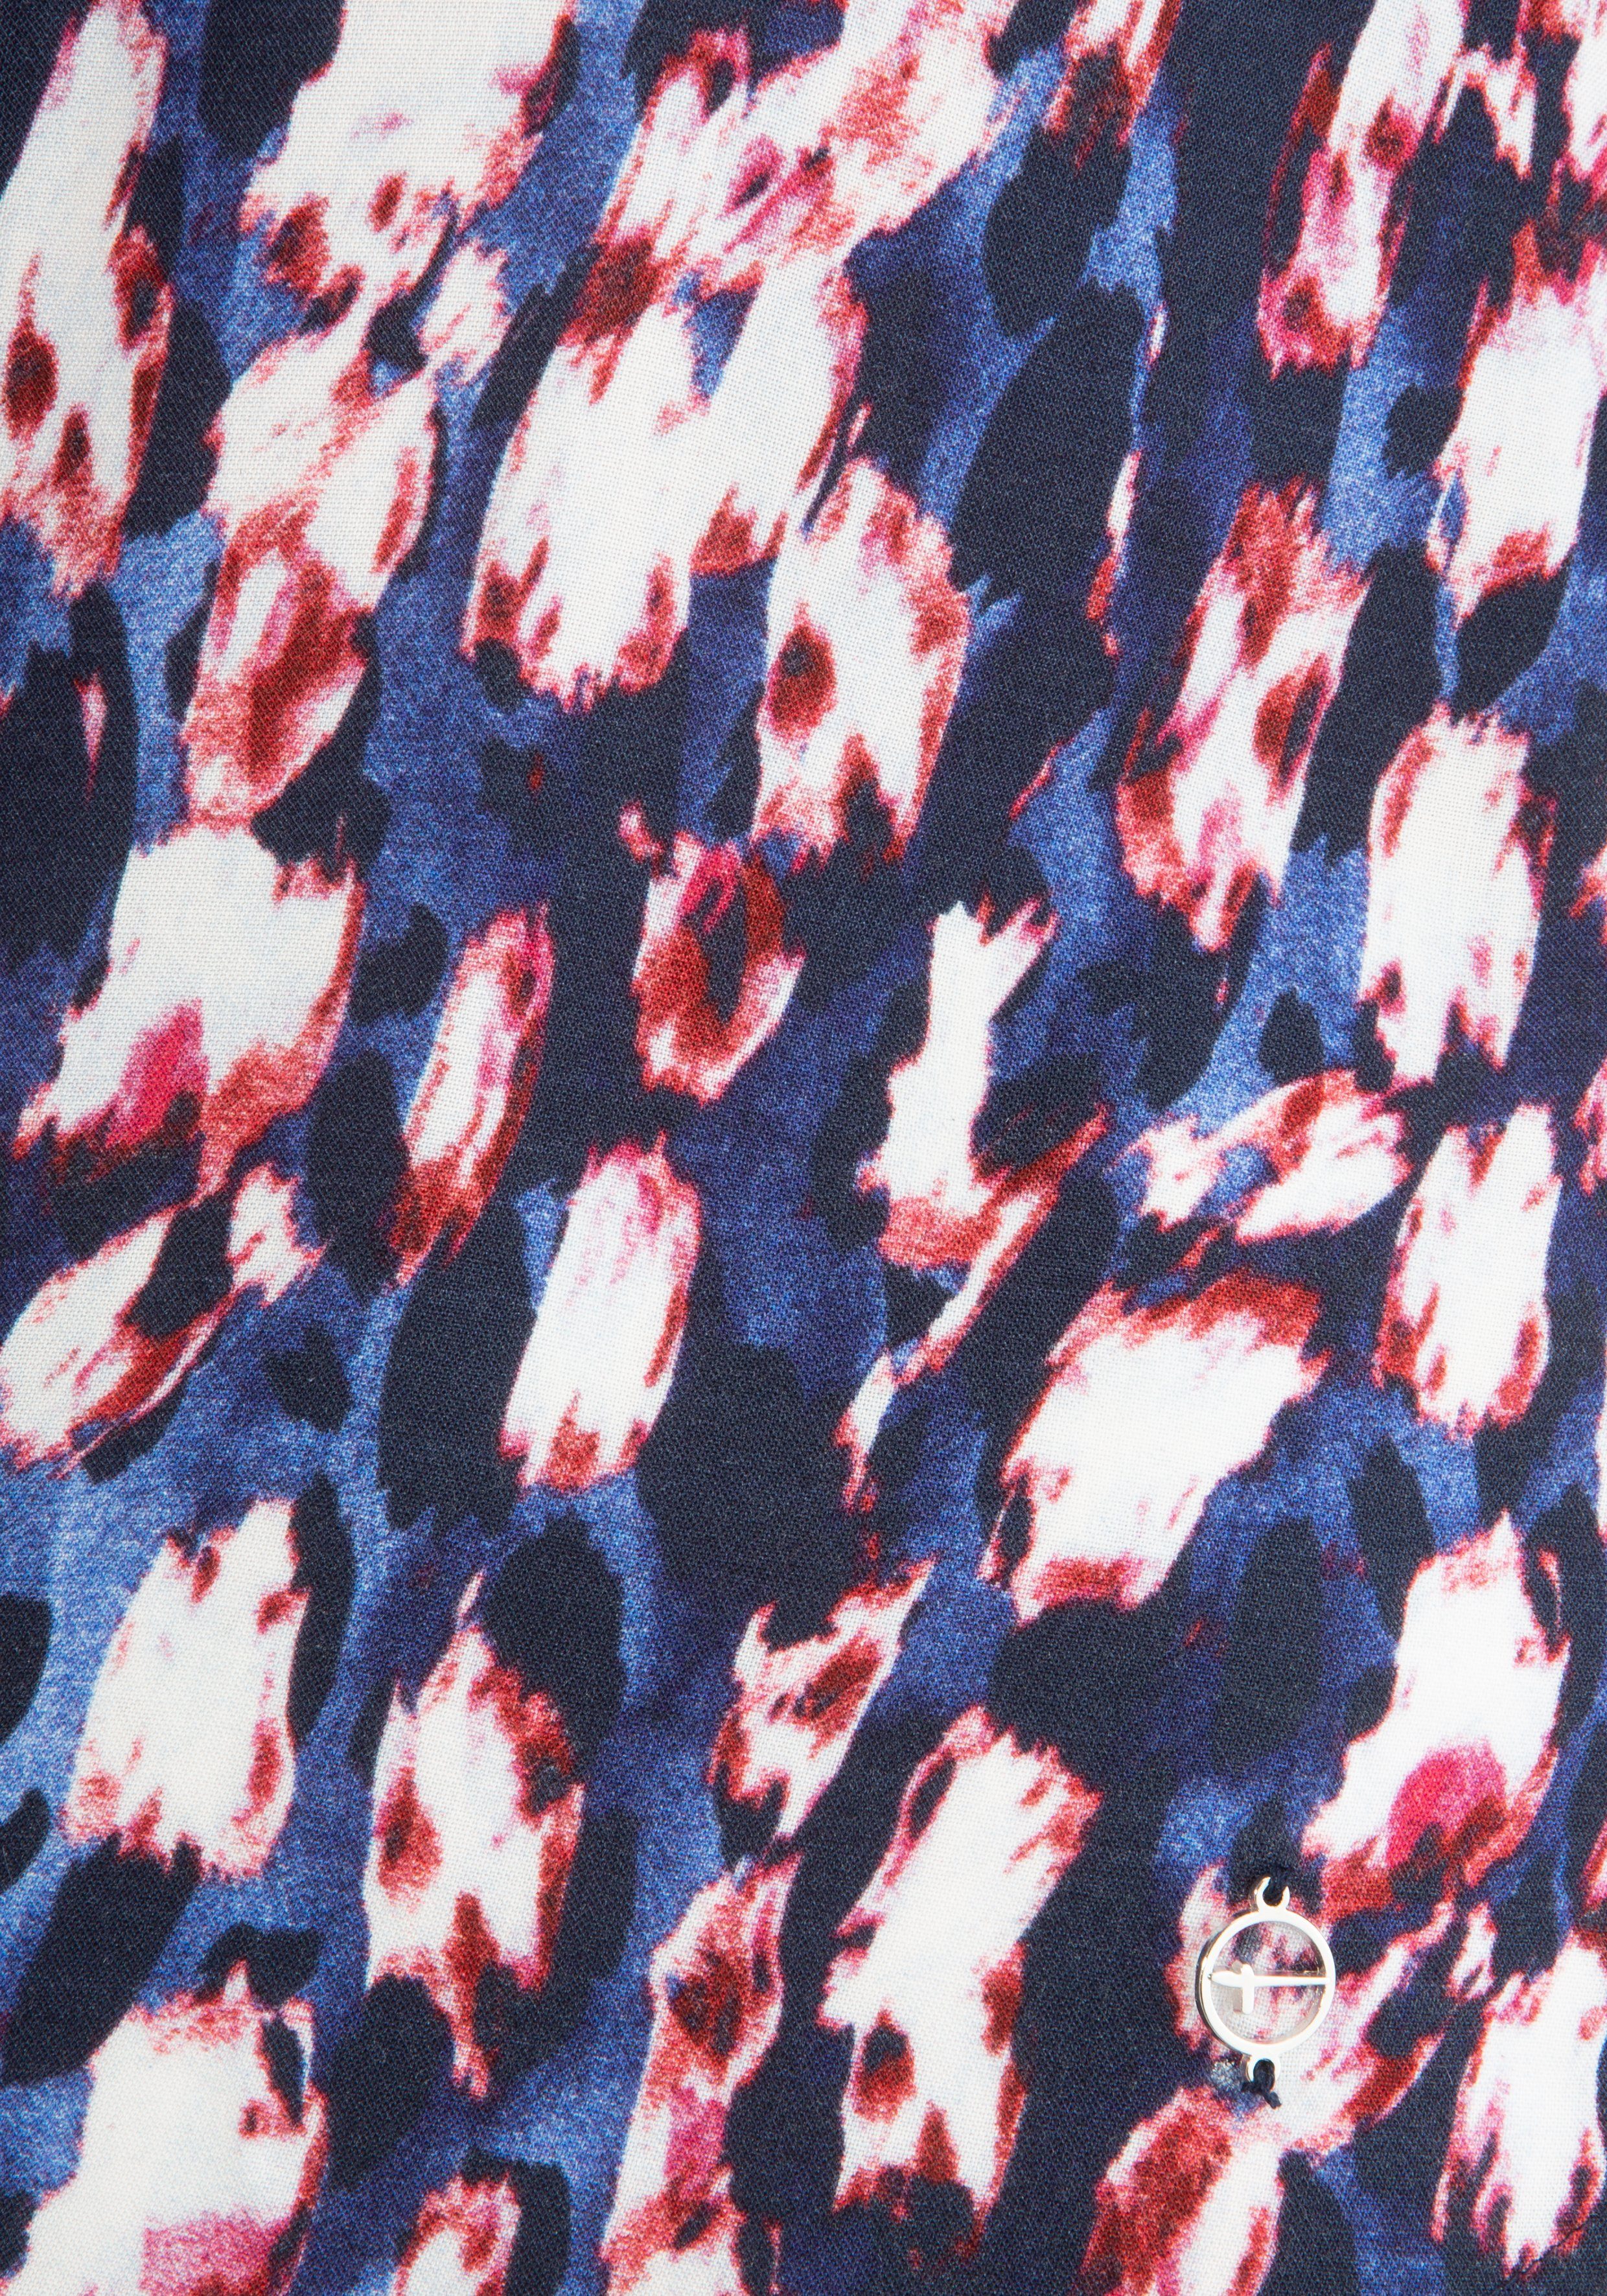 Tamaris Shirtbluse mit abgerundetem rot-blau-gemustert KOLLEKTION Saum NEUE 